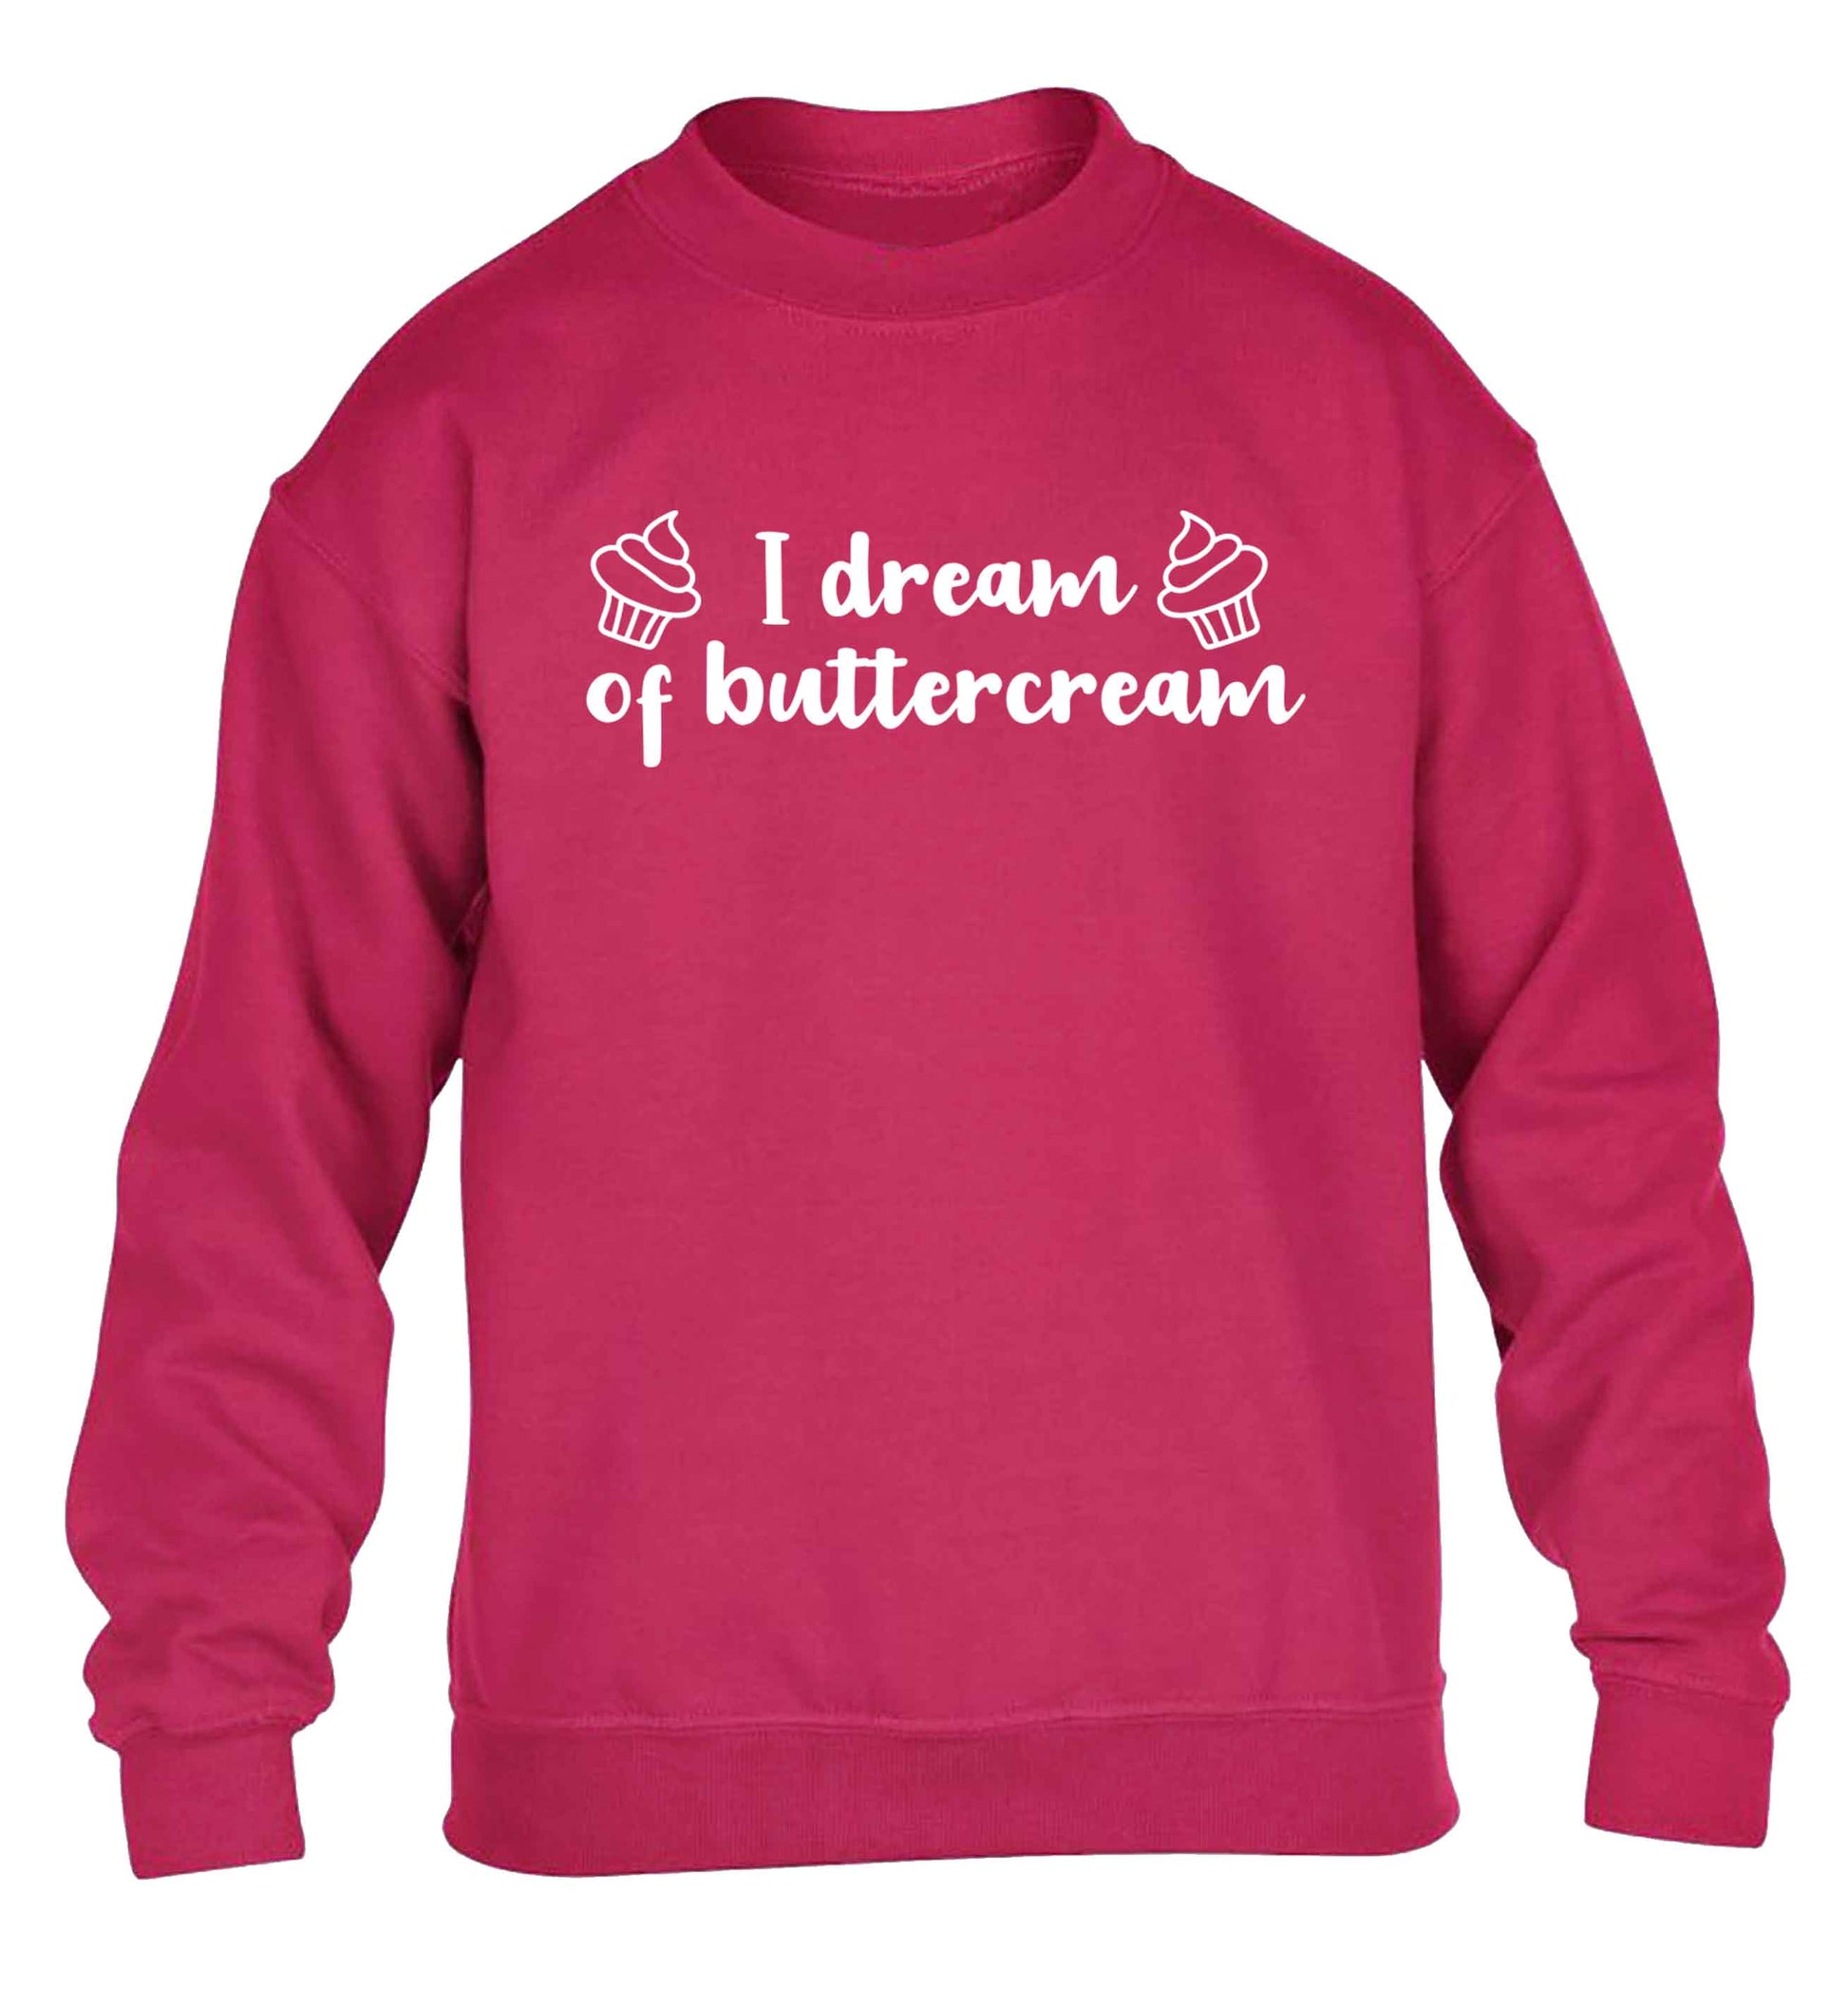 I dream of buttercream children's pink sweater 12-13 Years